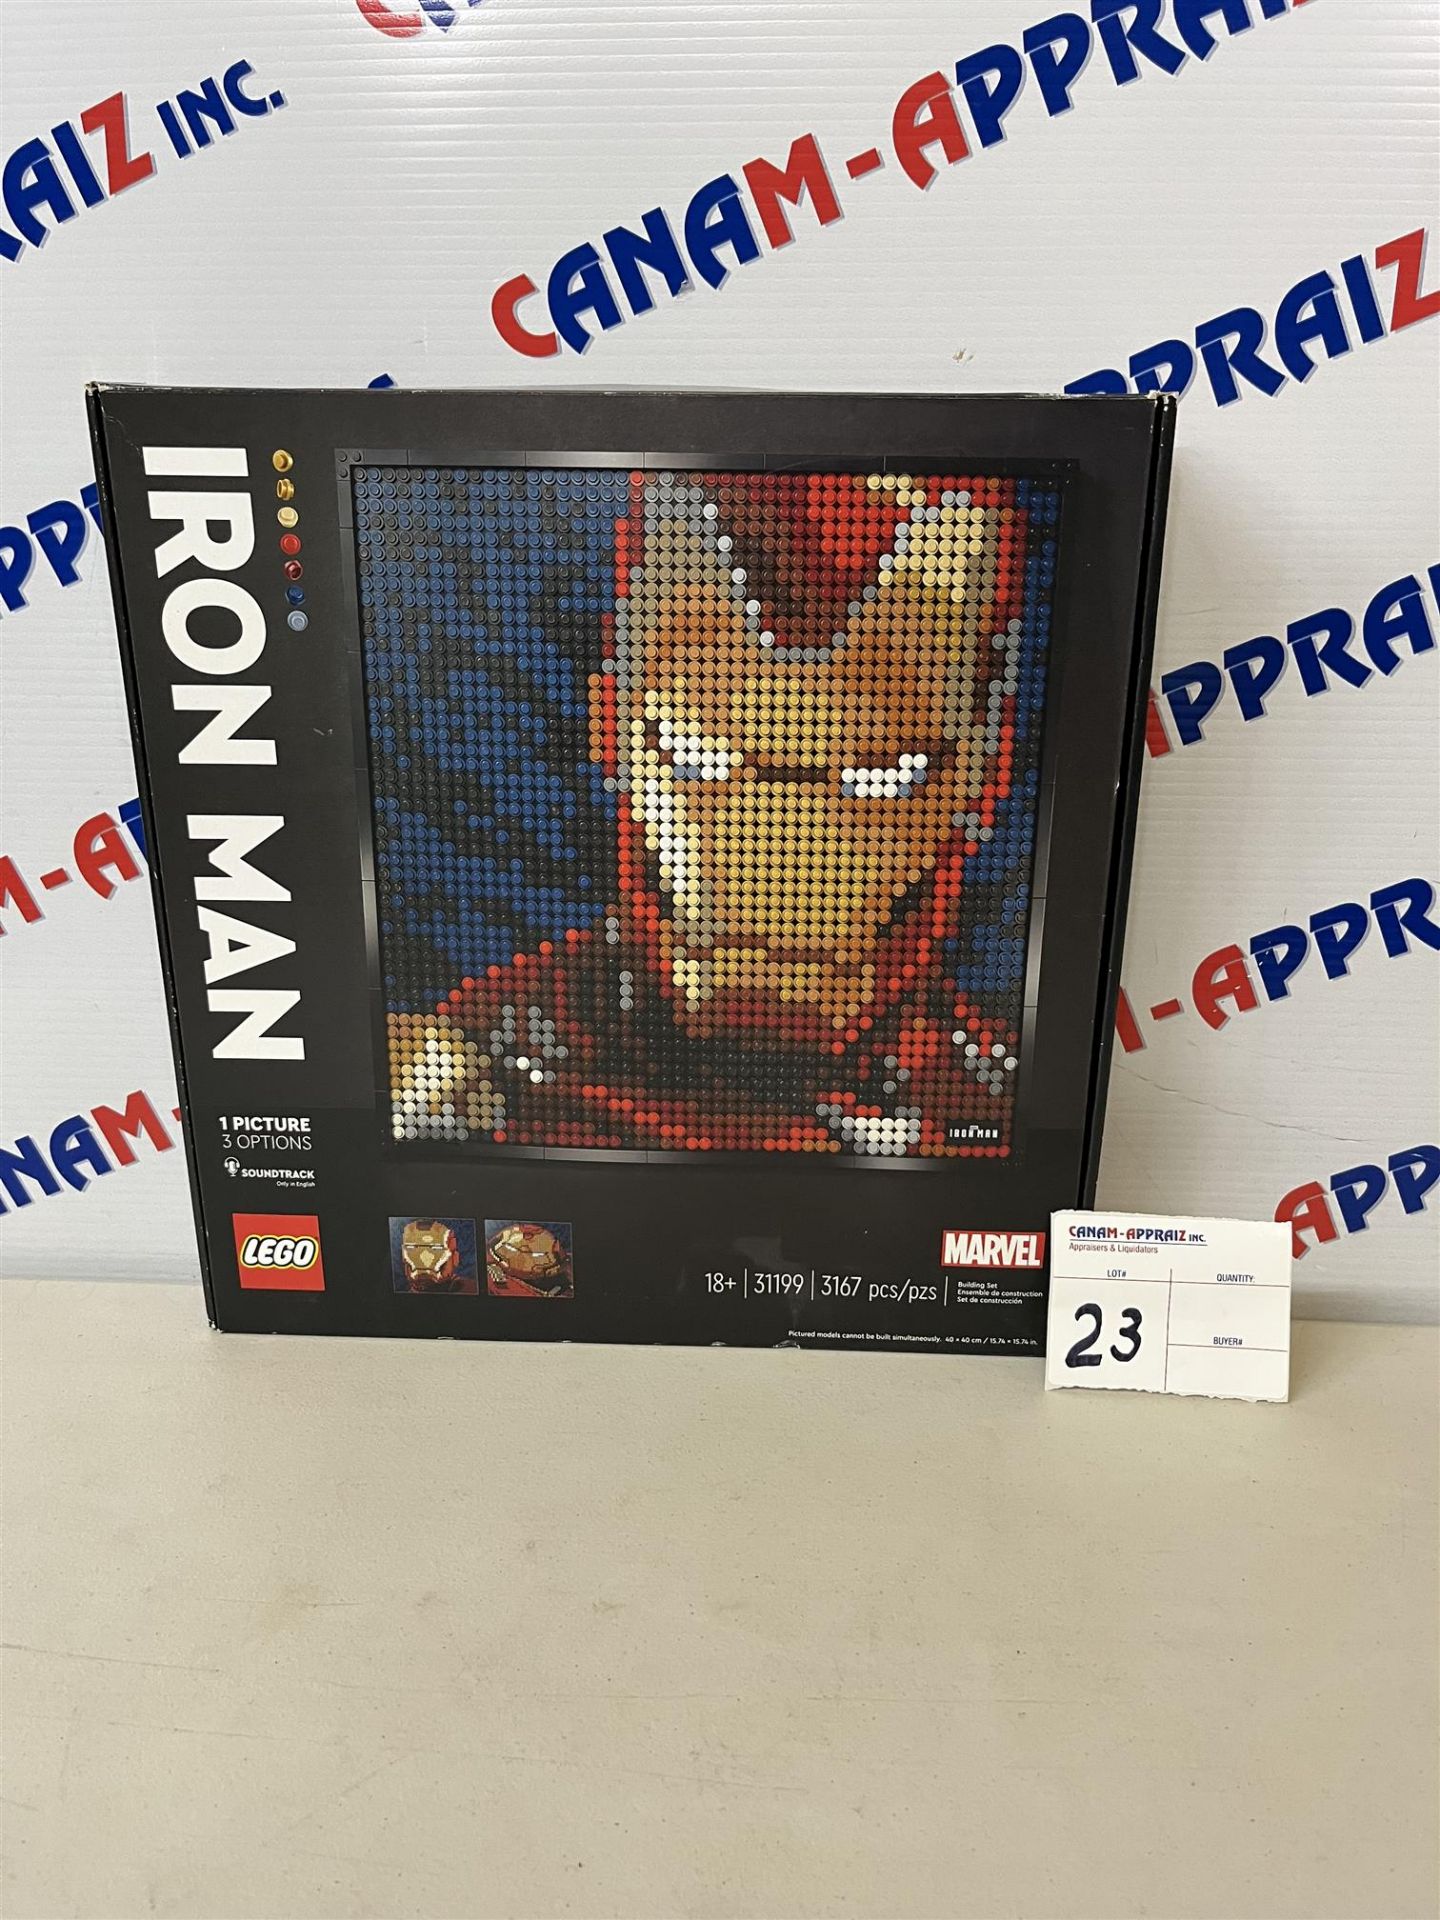 LEGO - 31199, 3167 pcs - Iron Man